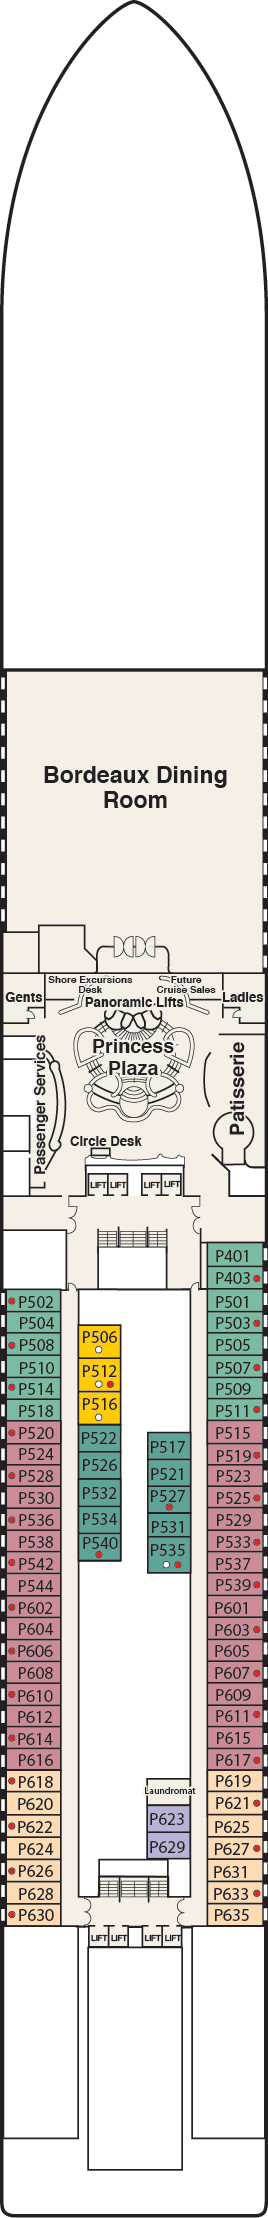 Plaza Deck Plan